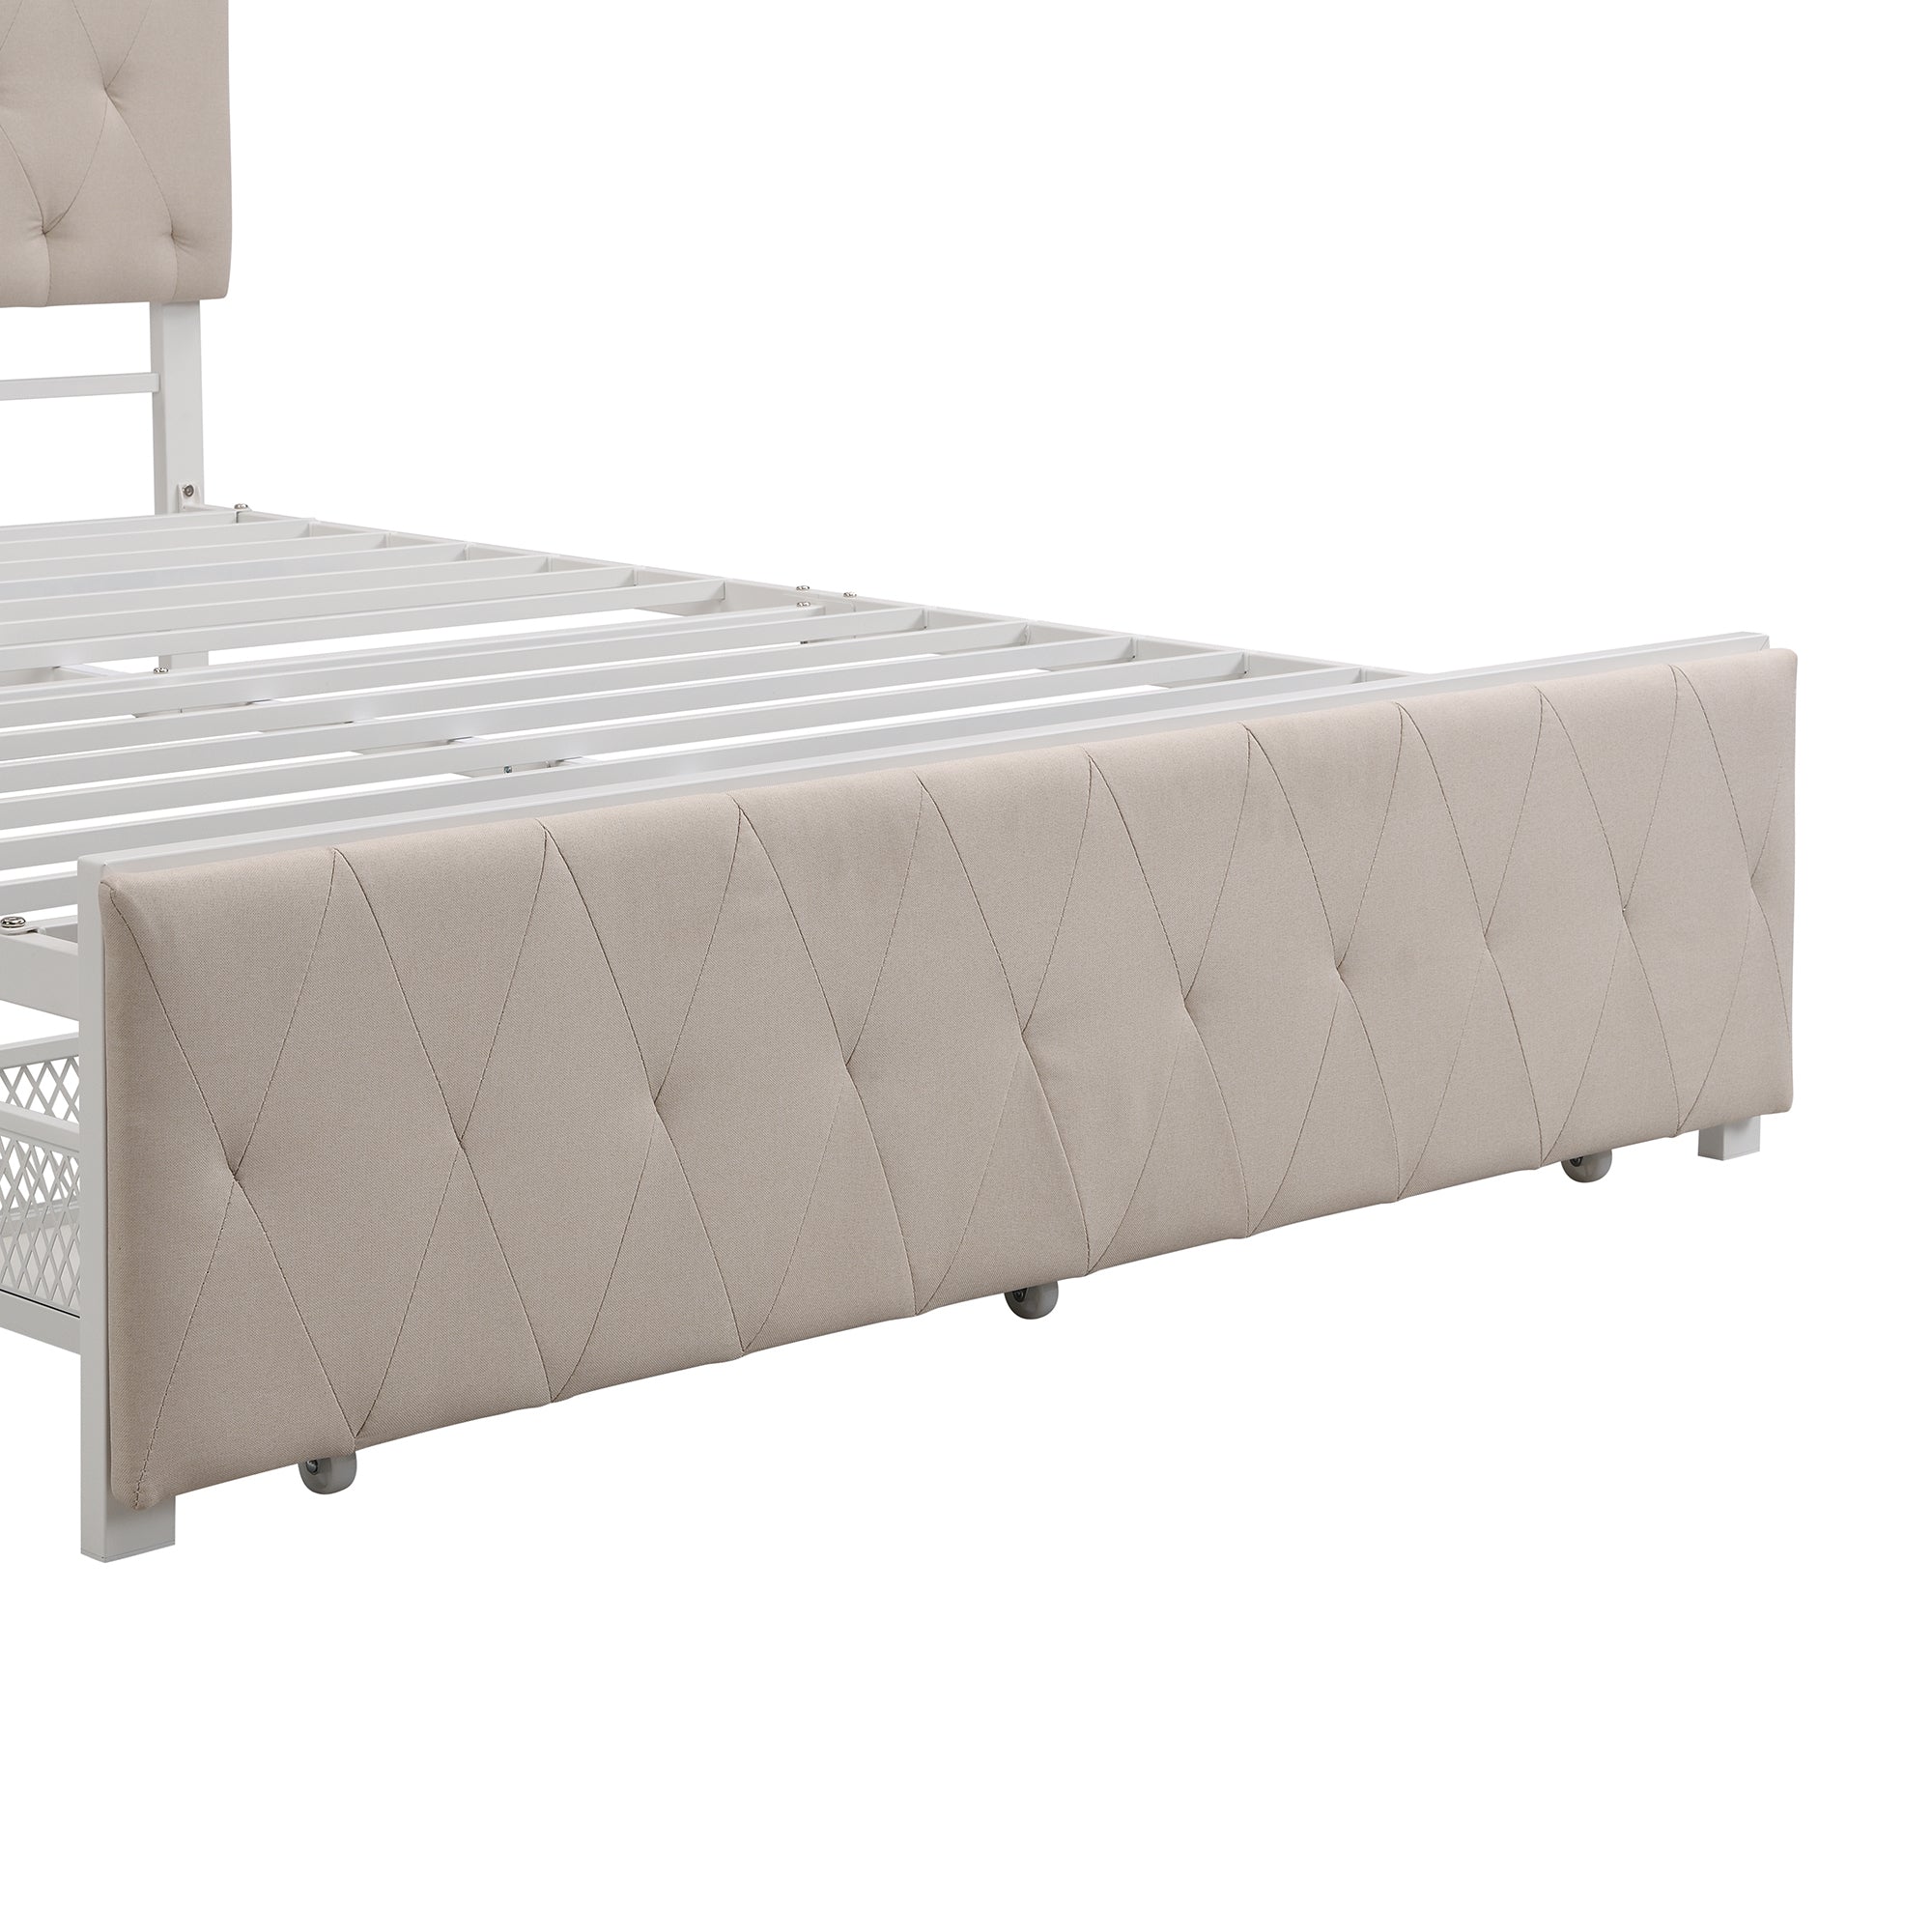 Queen Size Storage Metal Platform Bed with A Big Drawer - Beige By: Alabama Beds